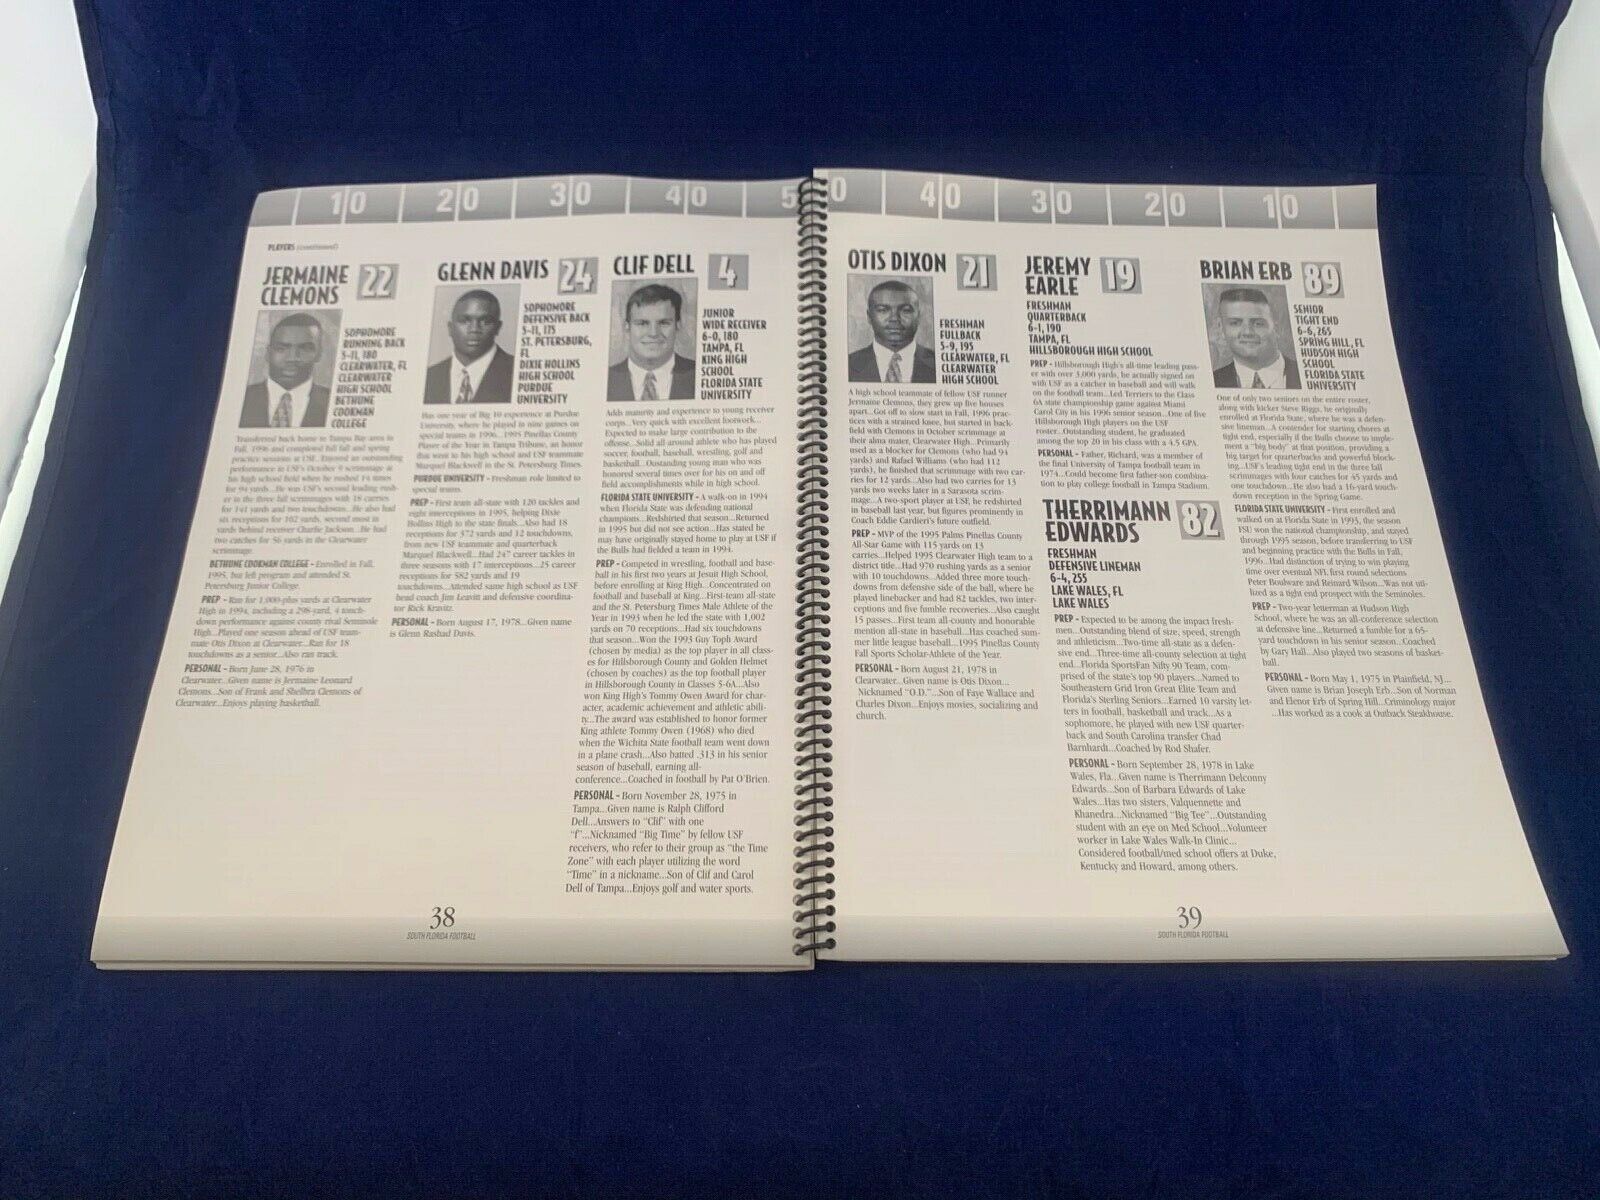 1997 USF Bulls NCAA Football Inaugural Season Media Guide Rare Bound Edition VG